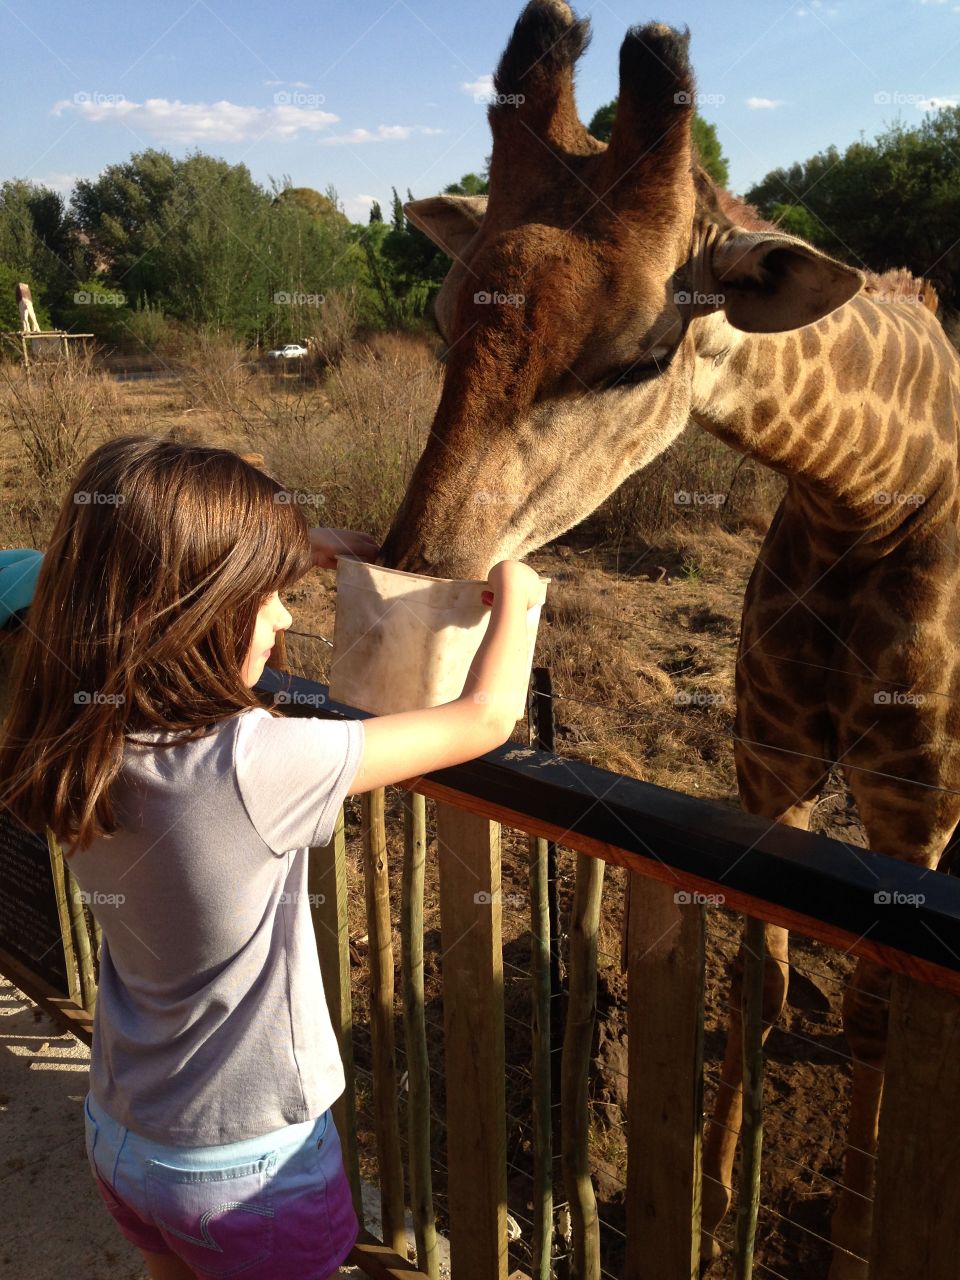 Giraffe at the Neck & Deck Café, Rhino and Lion park South Africa

